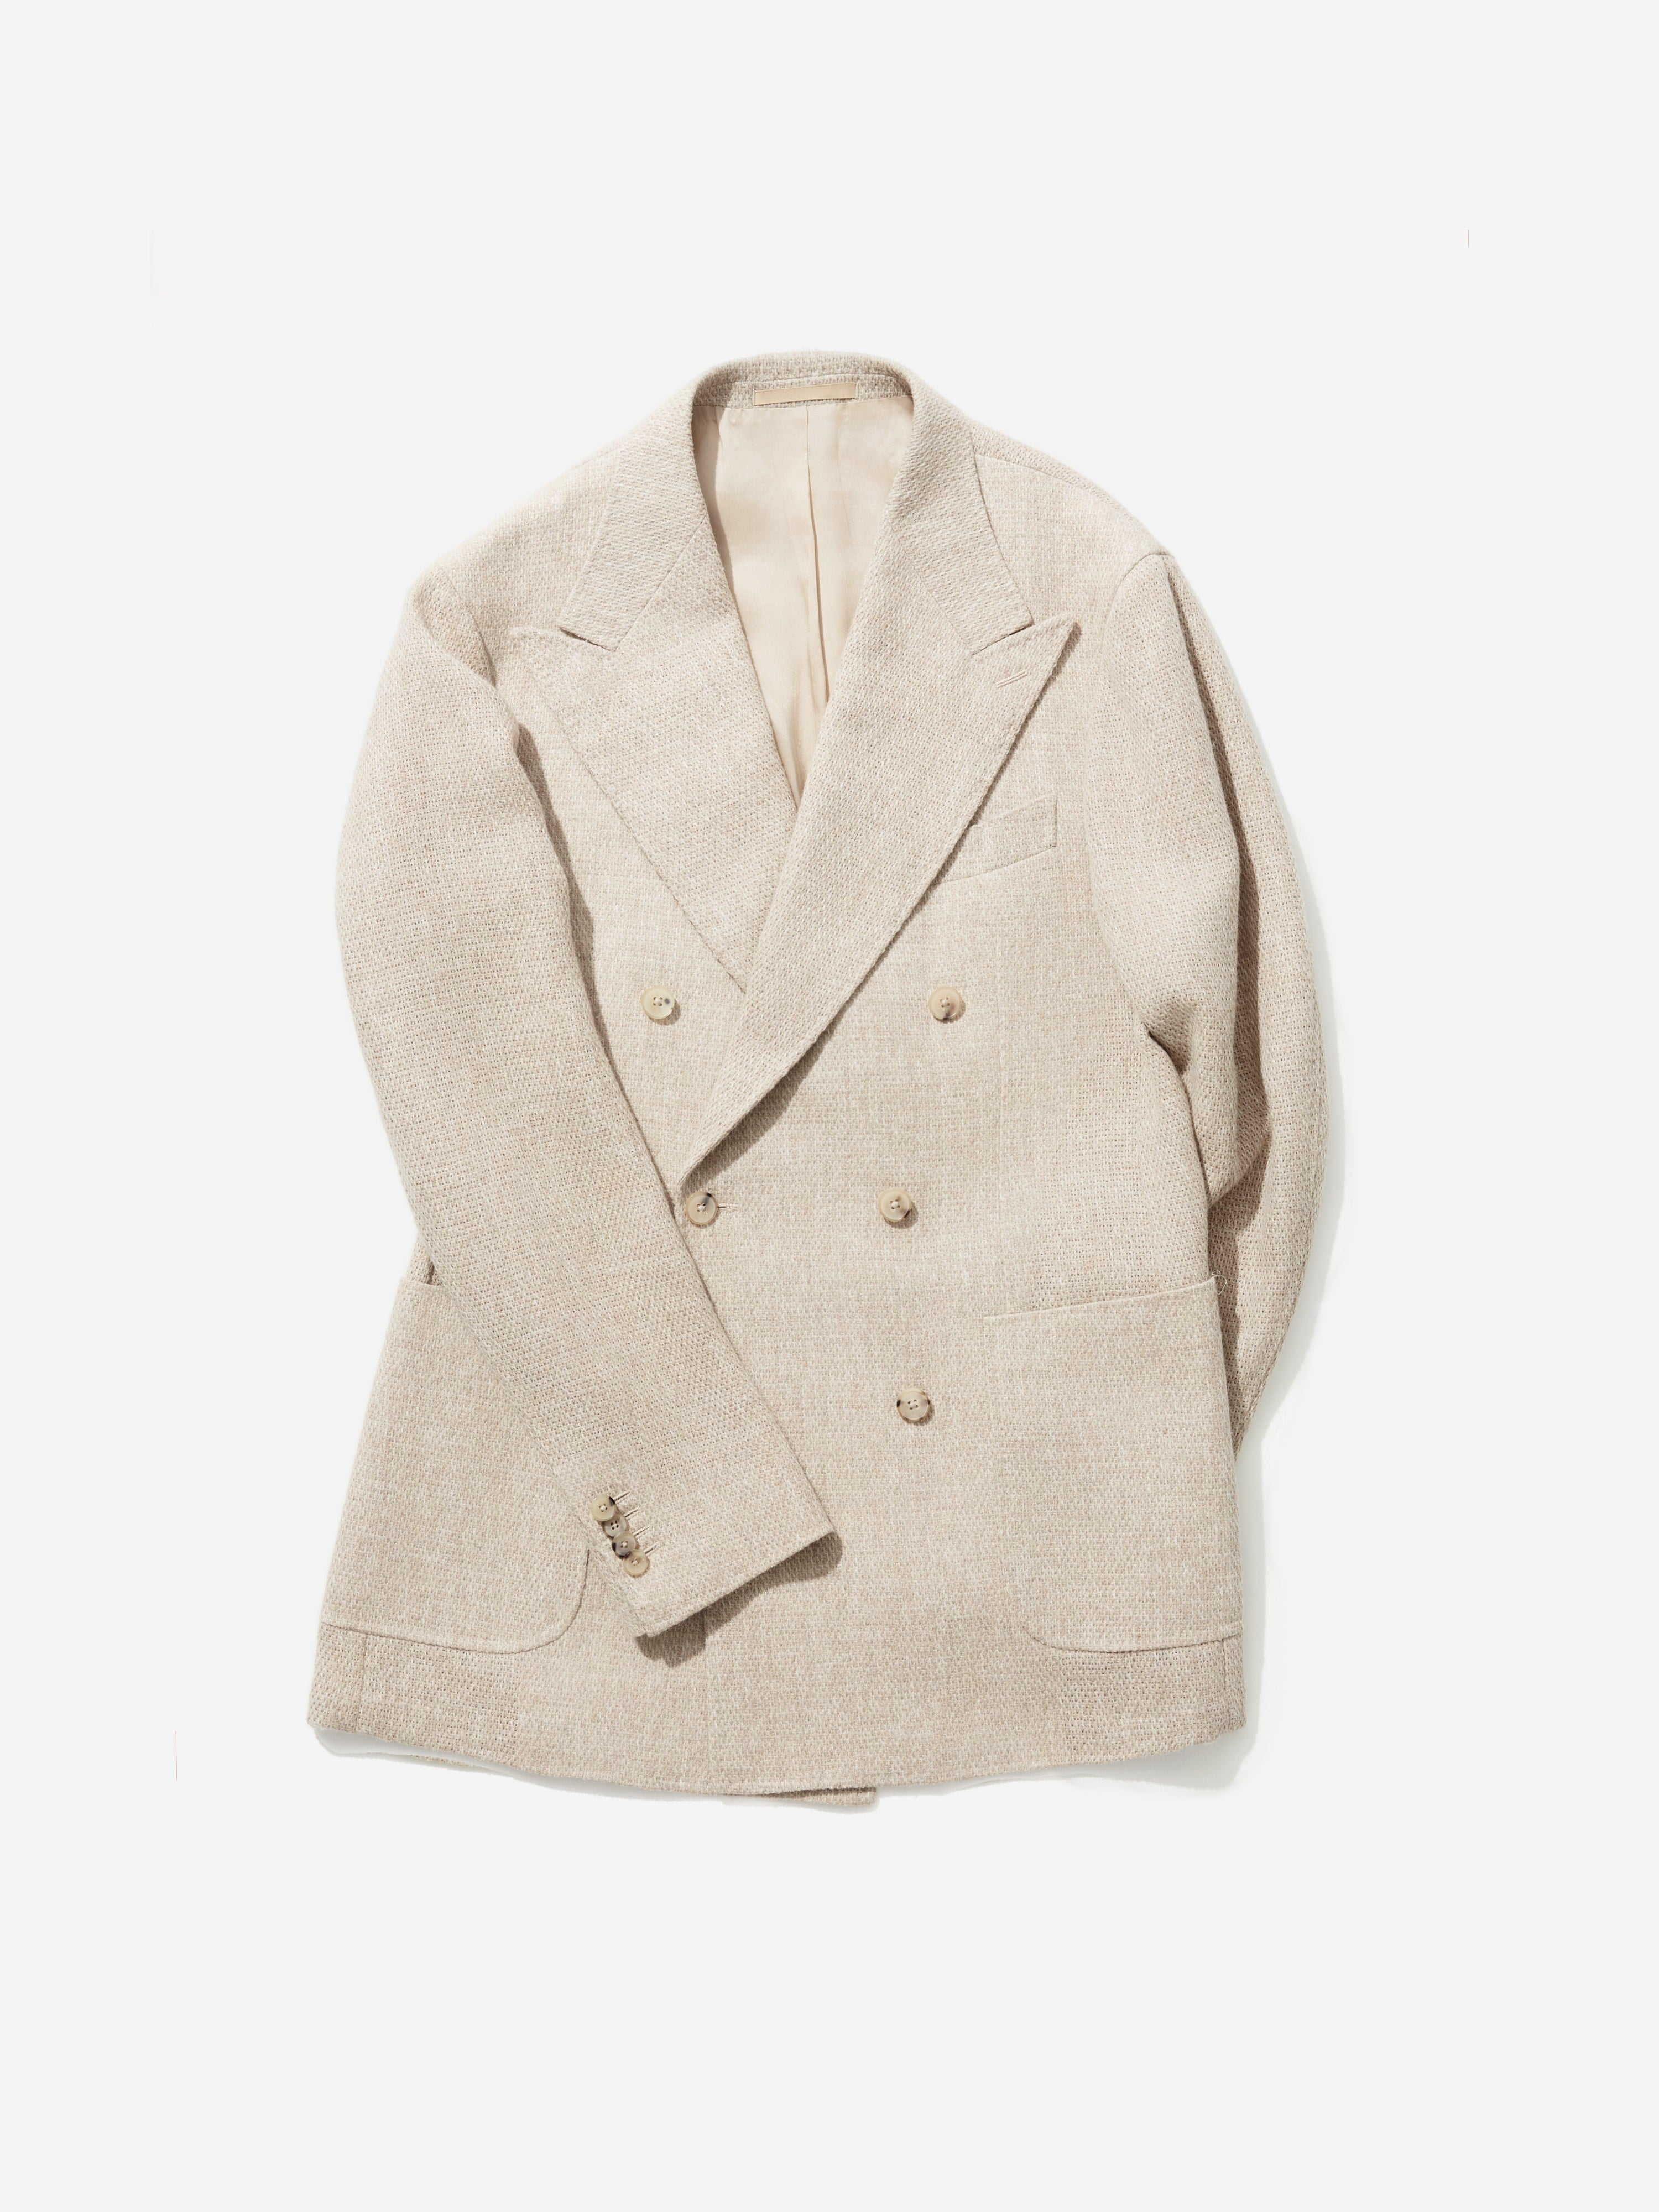 Cream Alpaca Wool Linen Suit - Grand Le Mar